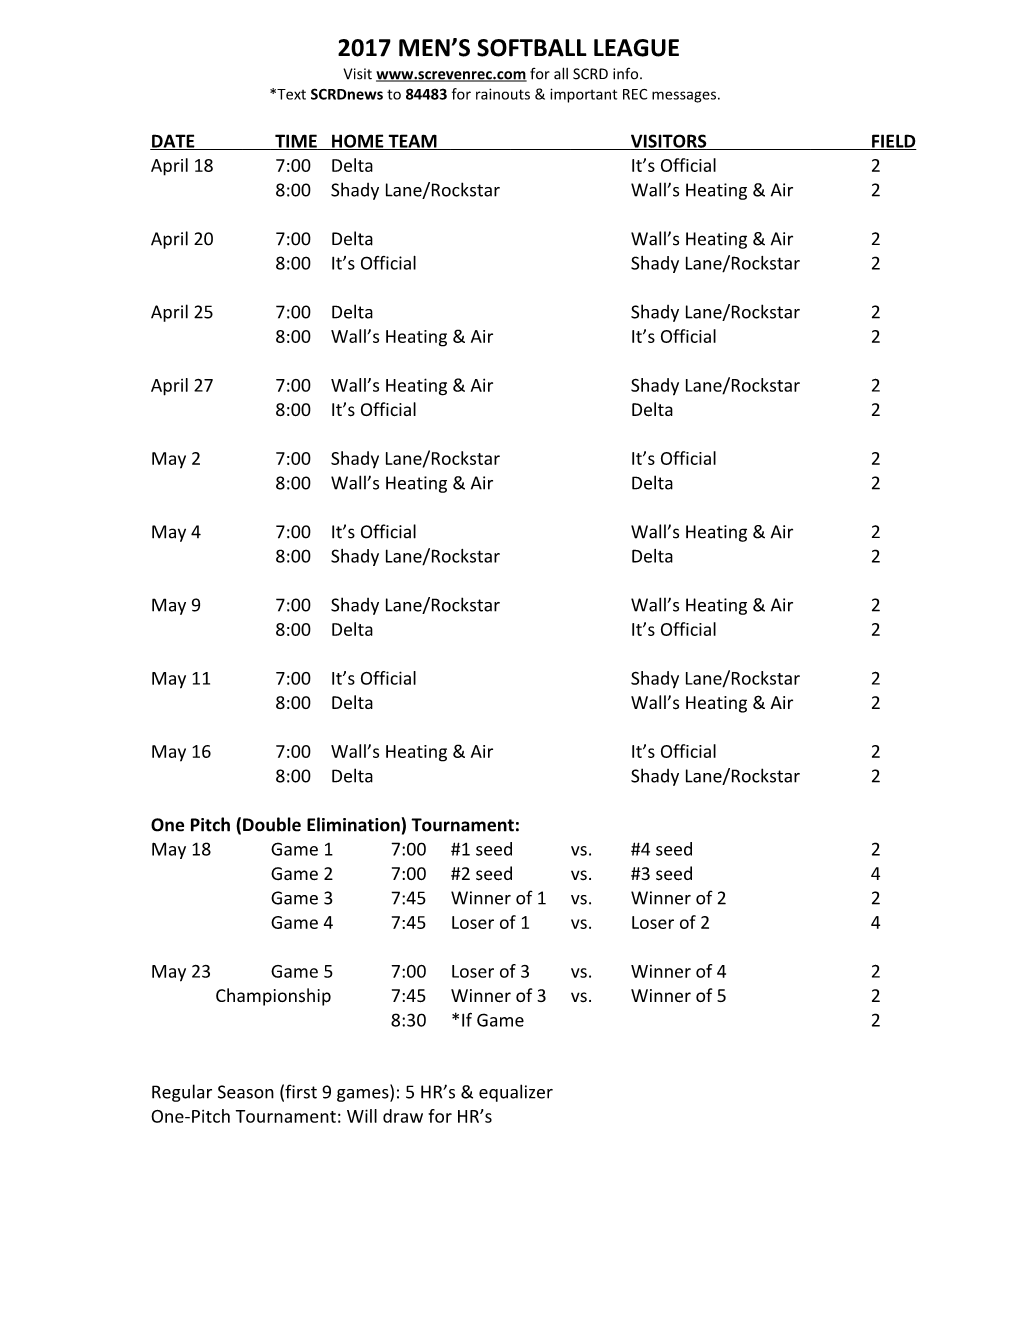 2006 Junior Baseball Schedule